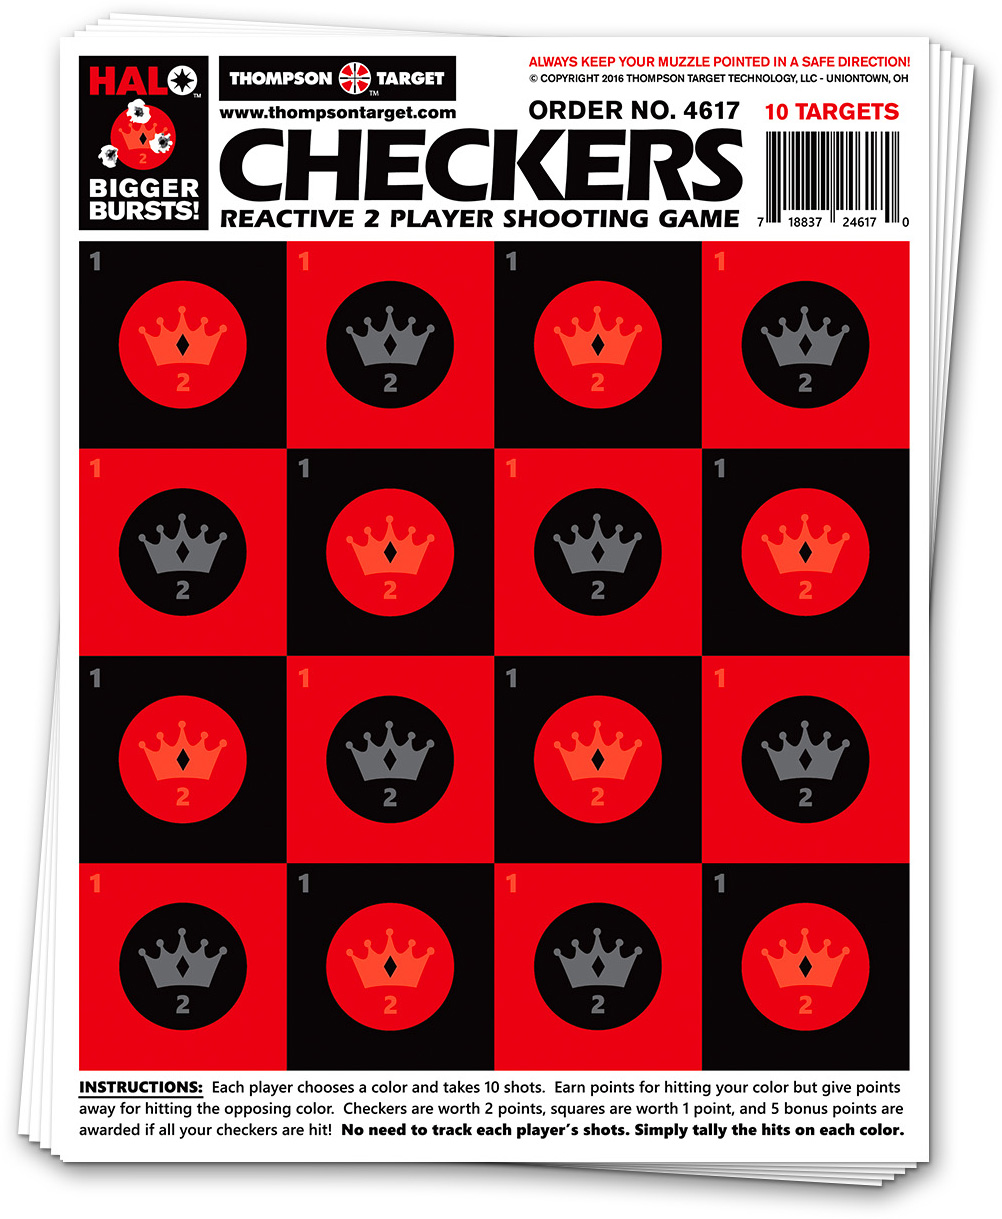 Thompson Target HALO Checkers Reactive Splatter Shooting Game Targets 8.5x11